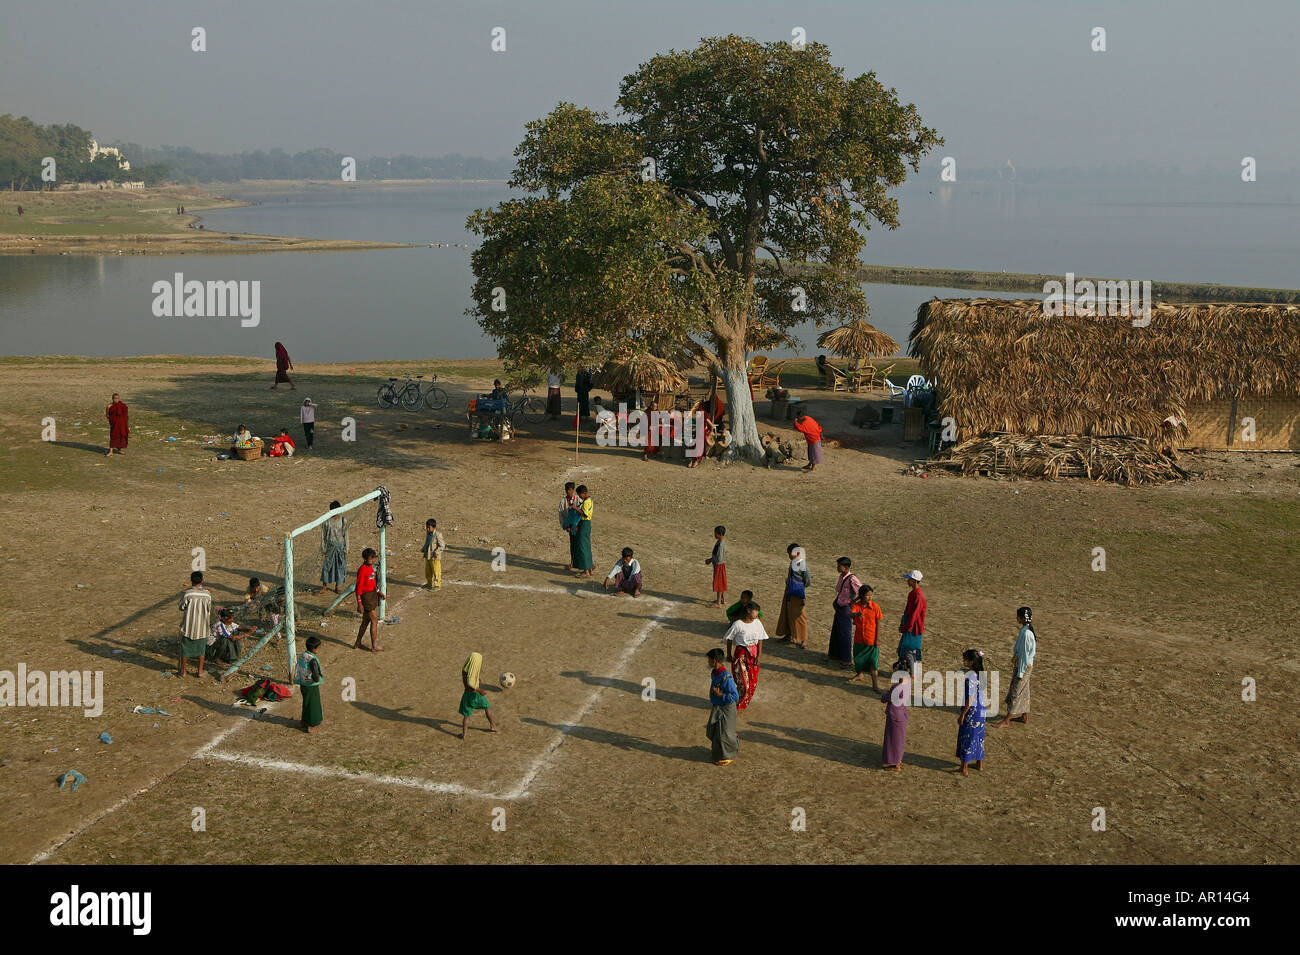 Football seen from U Bein bridge, Fussballspiel neben der U Bein Bruecke, Amarapura, Fussballplatz am Ufer, near Mandalay Stock Photo